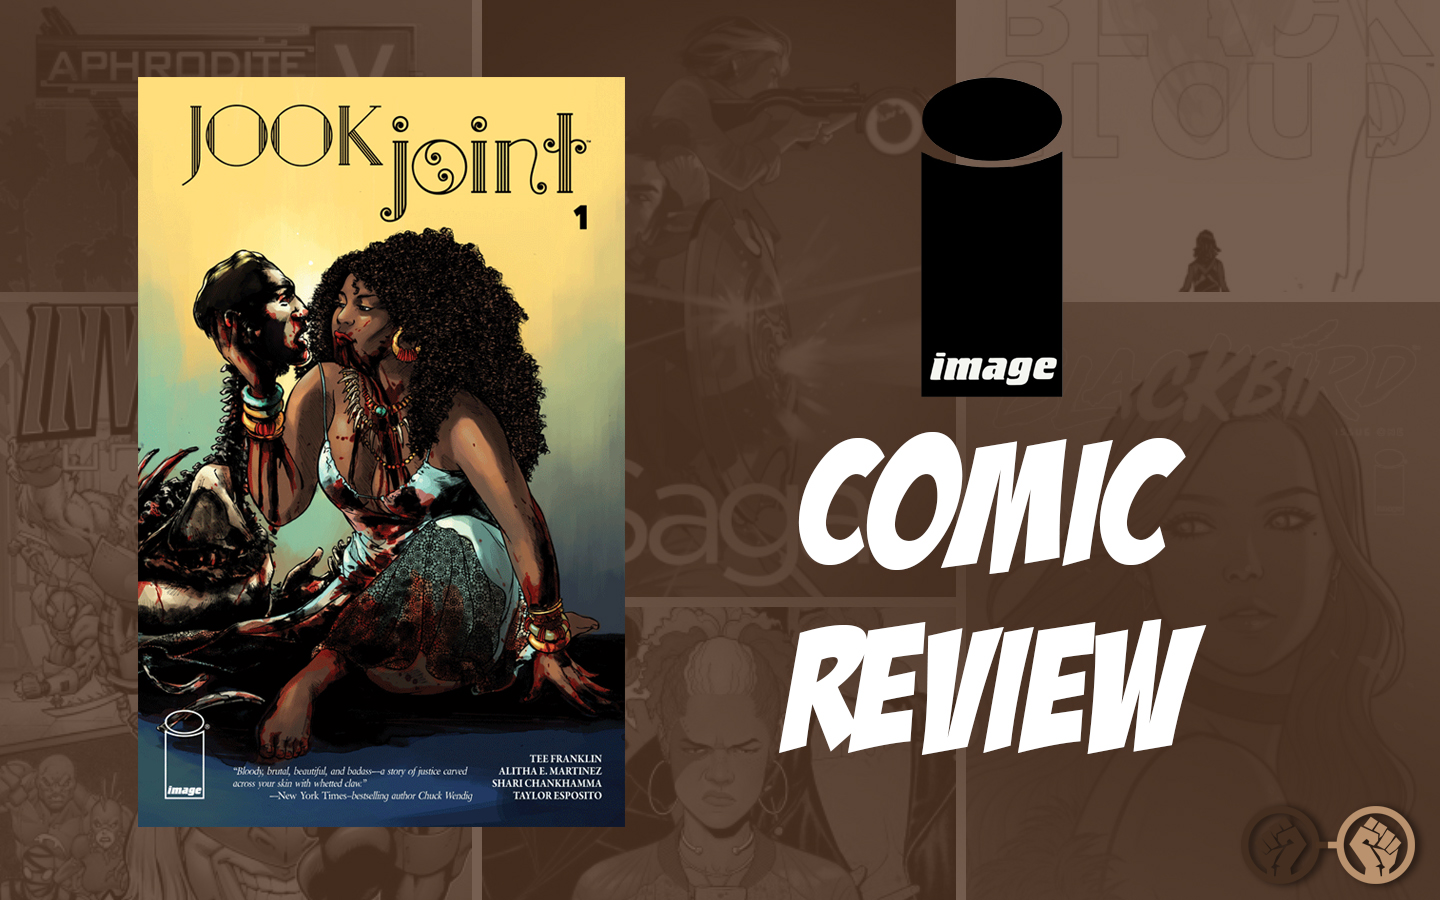 GOC Comic Review: Jook Joint #1